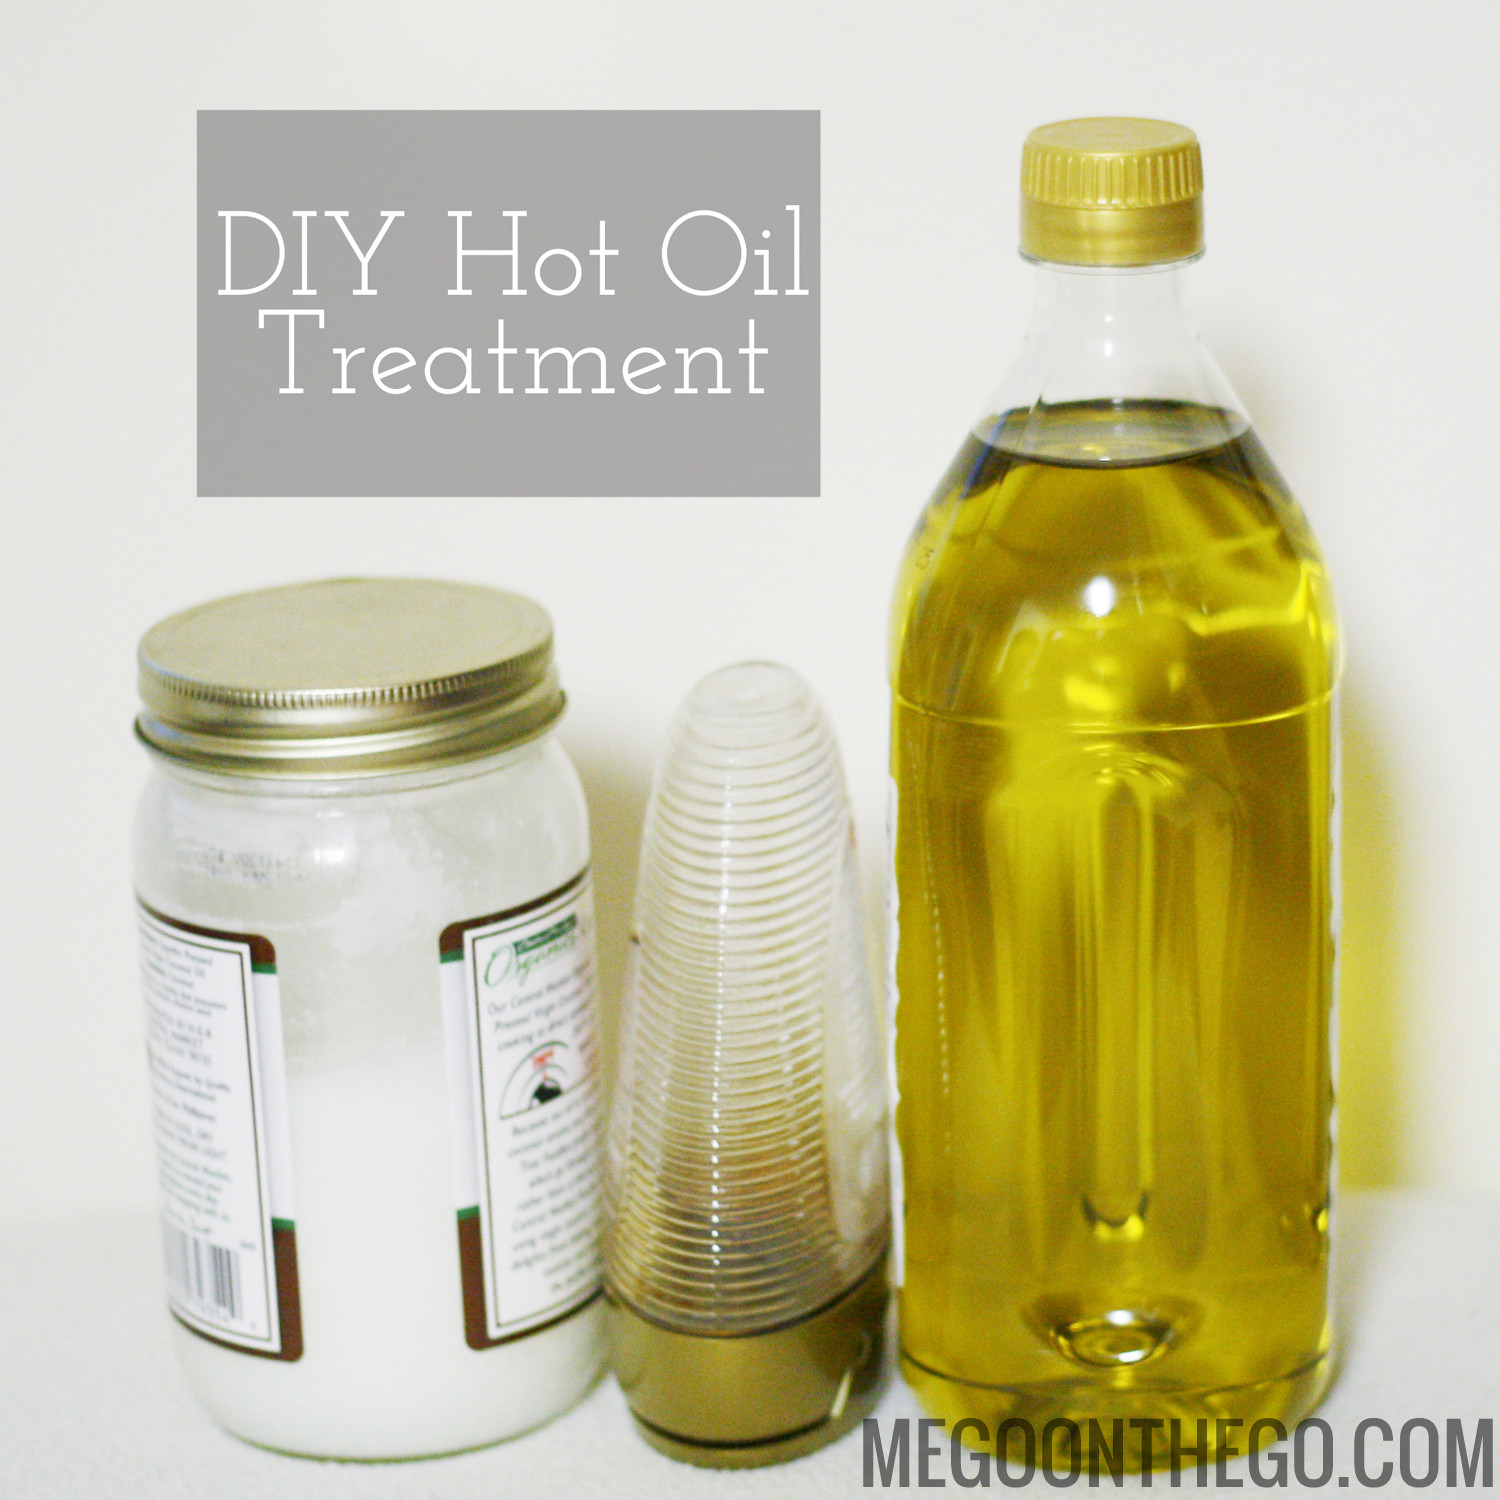 DIY Hair Oil Treatment
 DIY Hot Oil Treatment